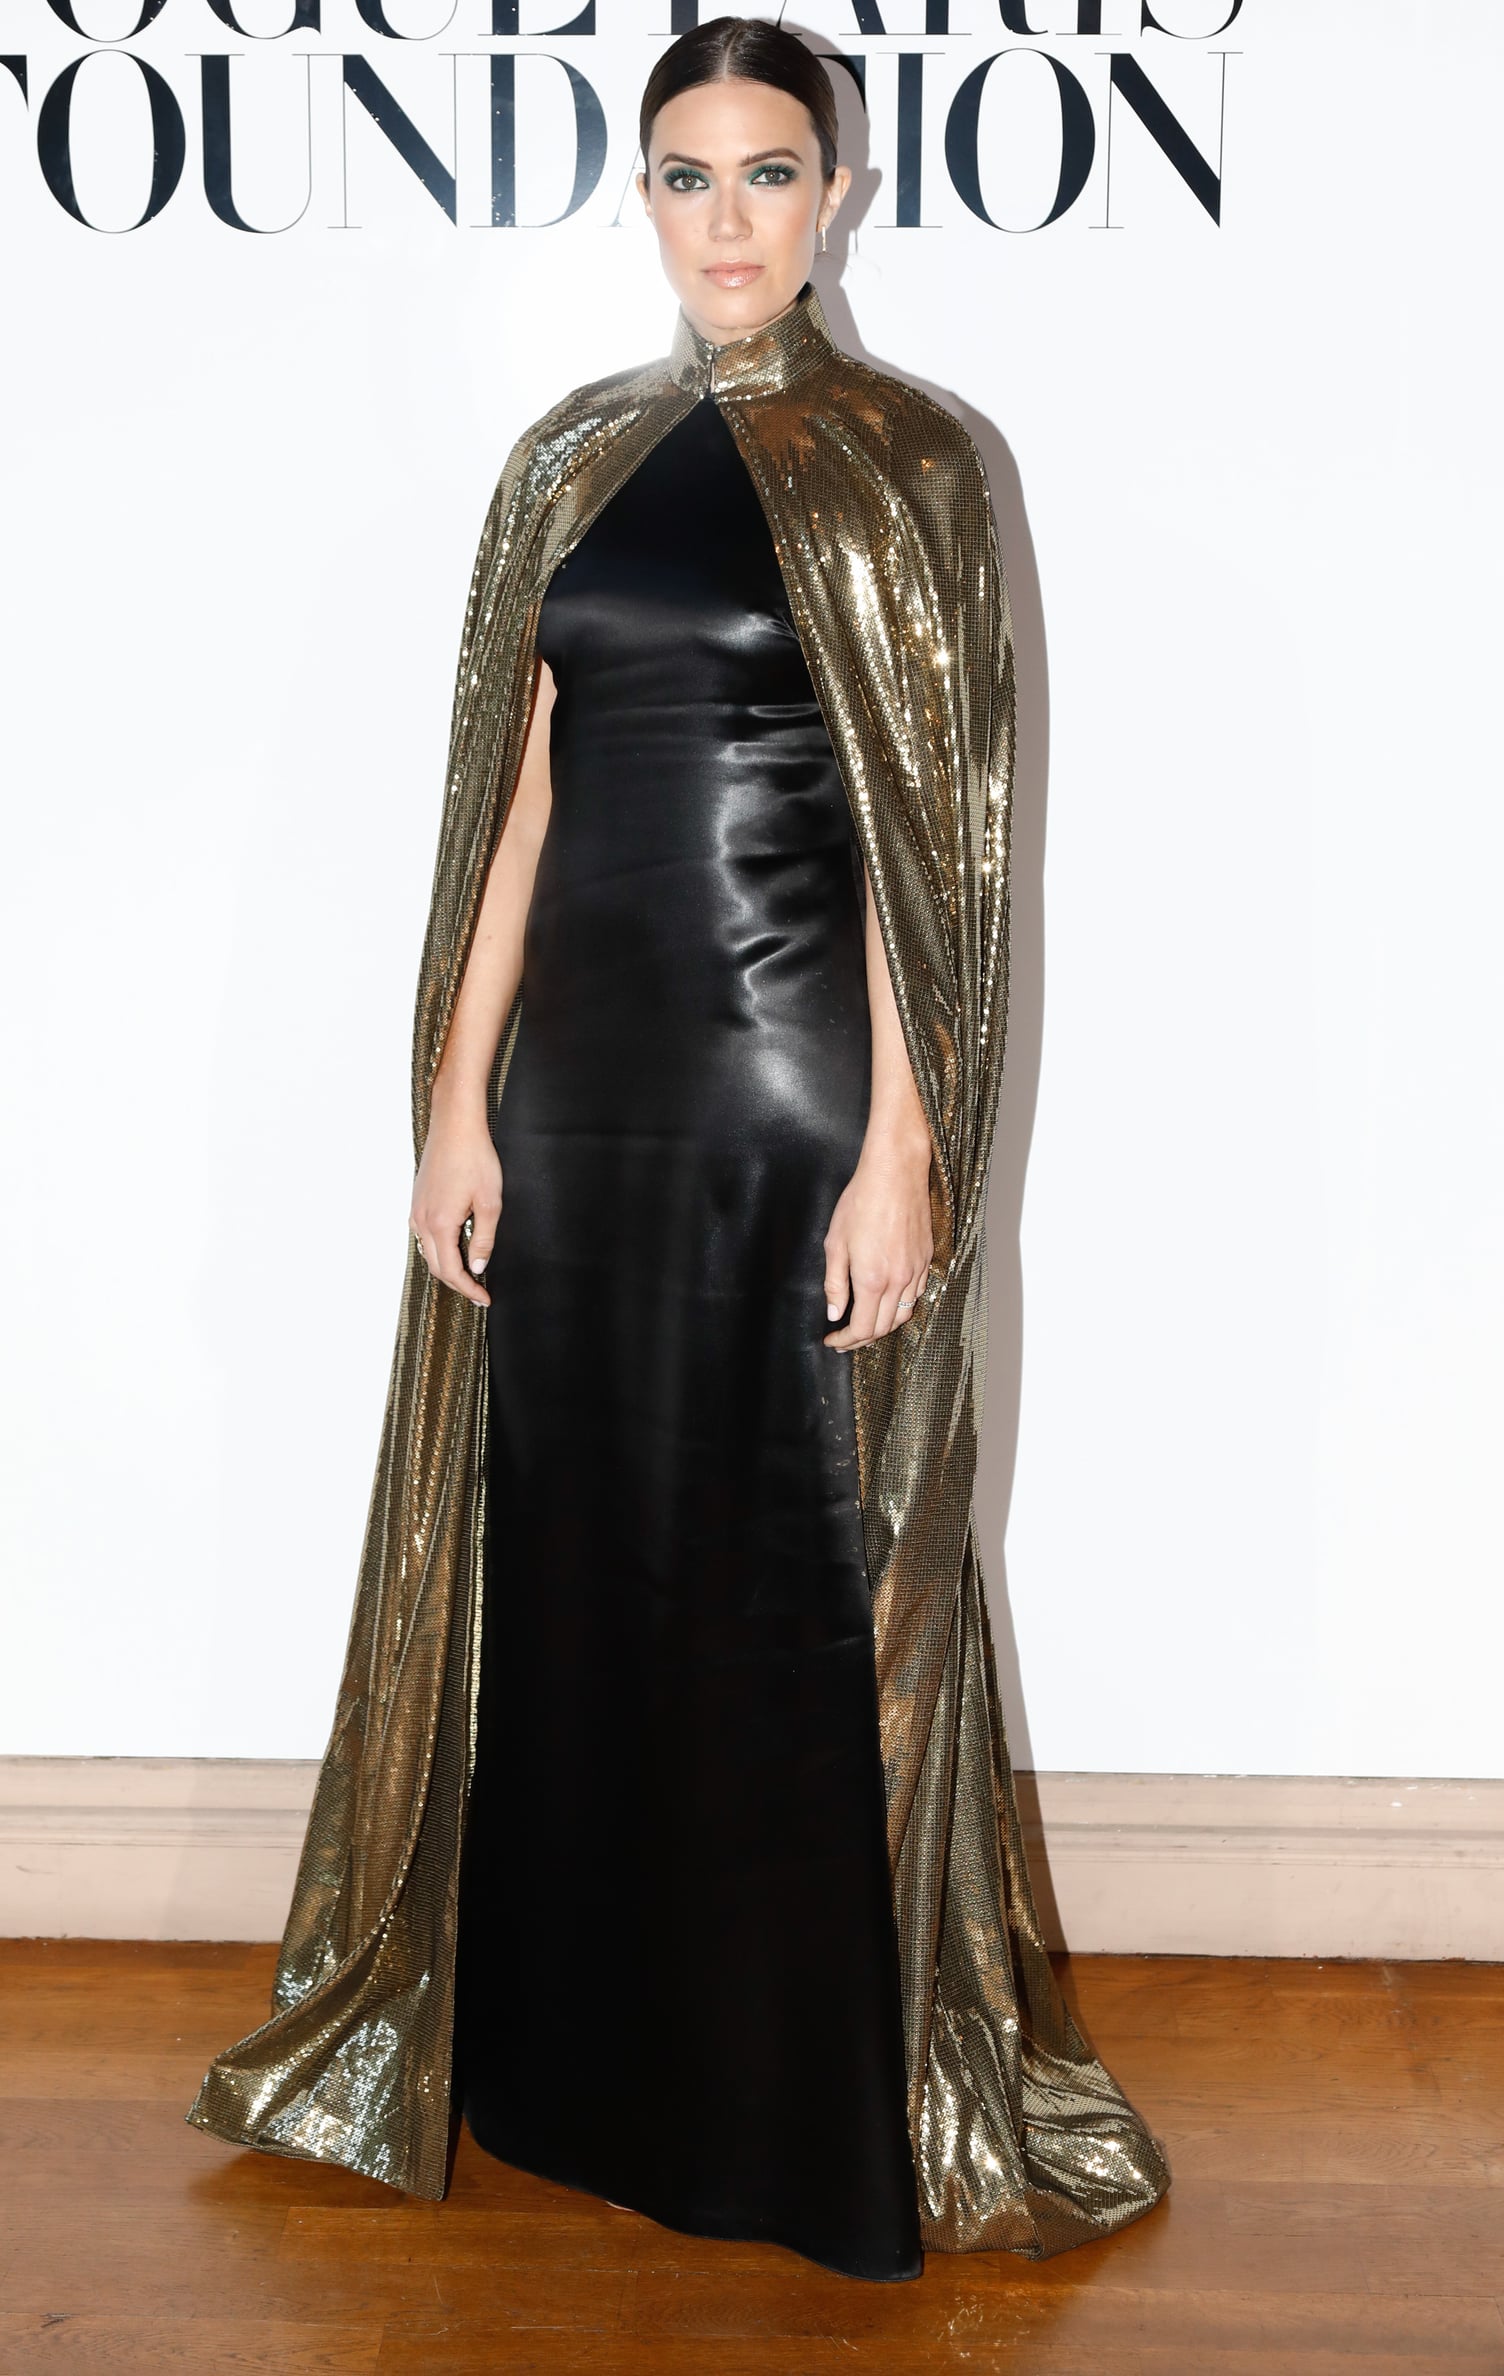 Mandy Moore in Gold Cape in Paris | POPSUGAR Fashion